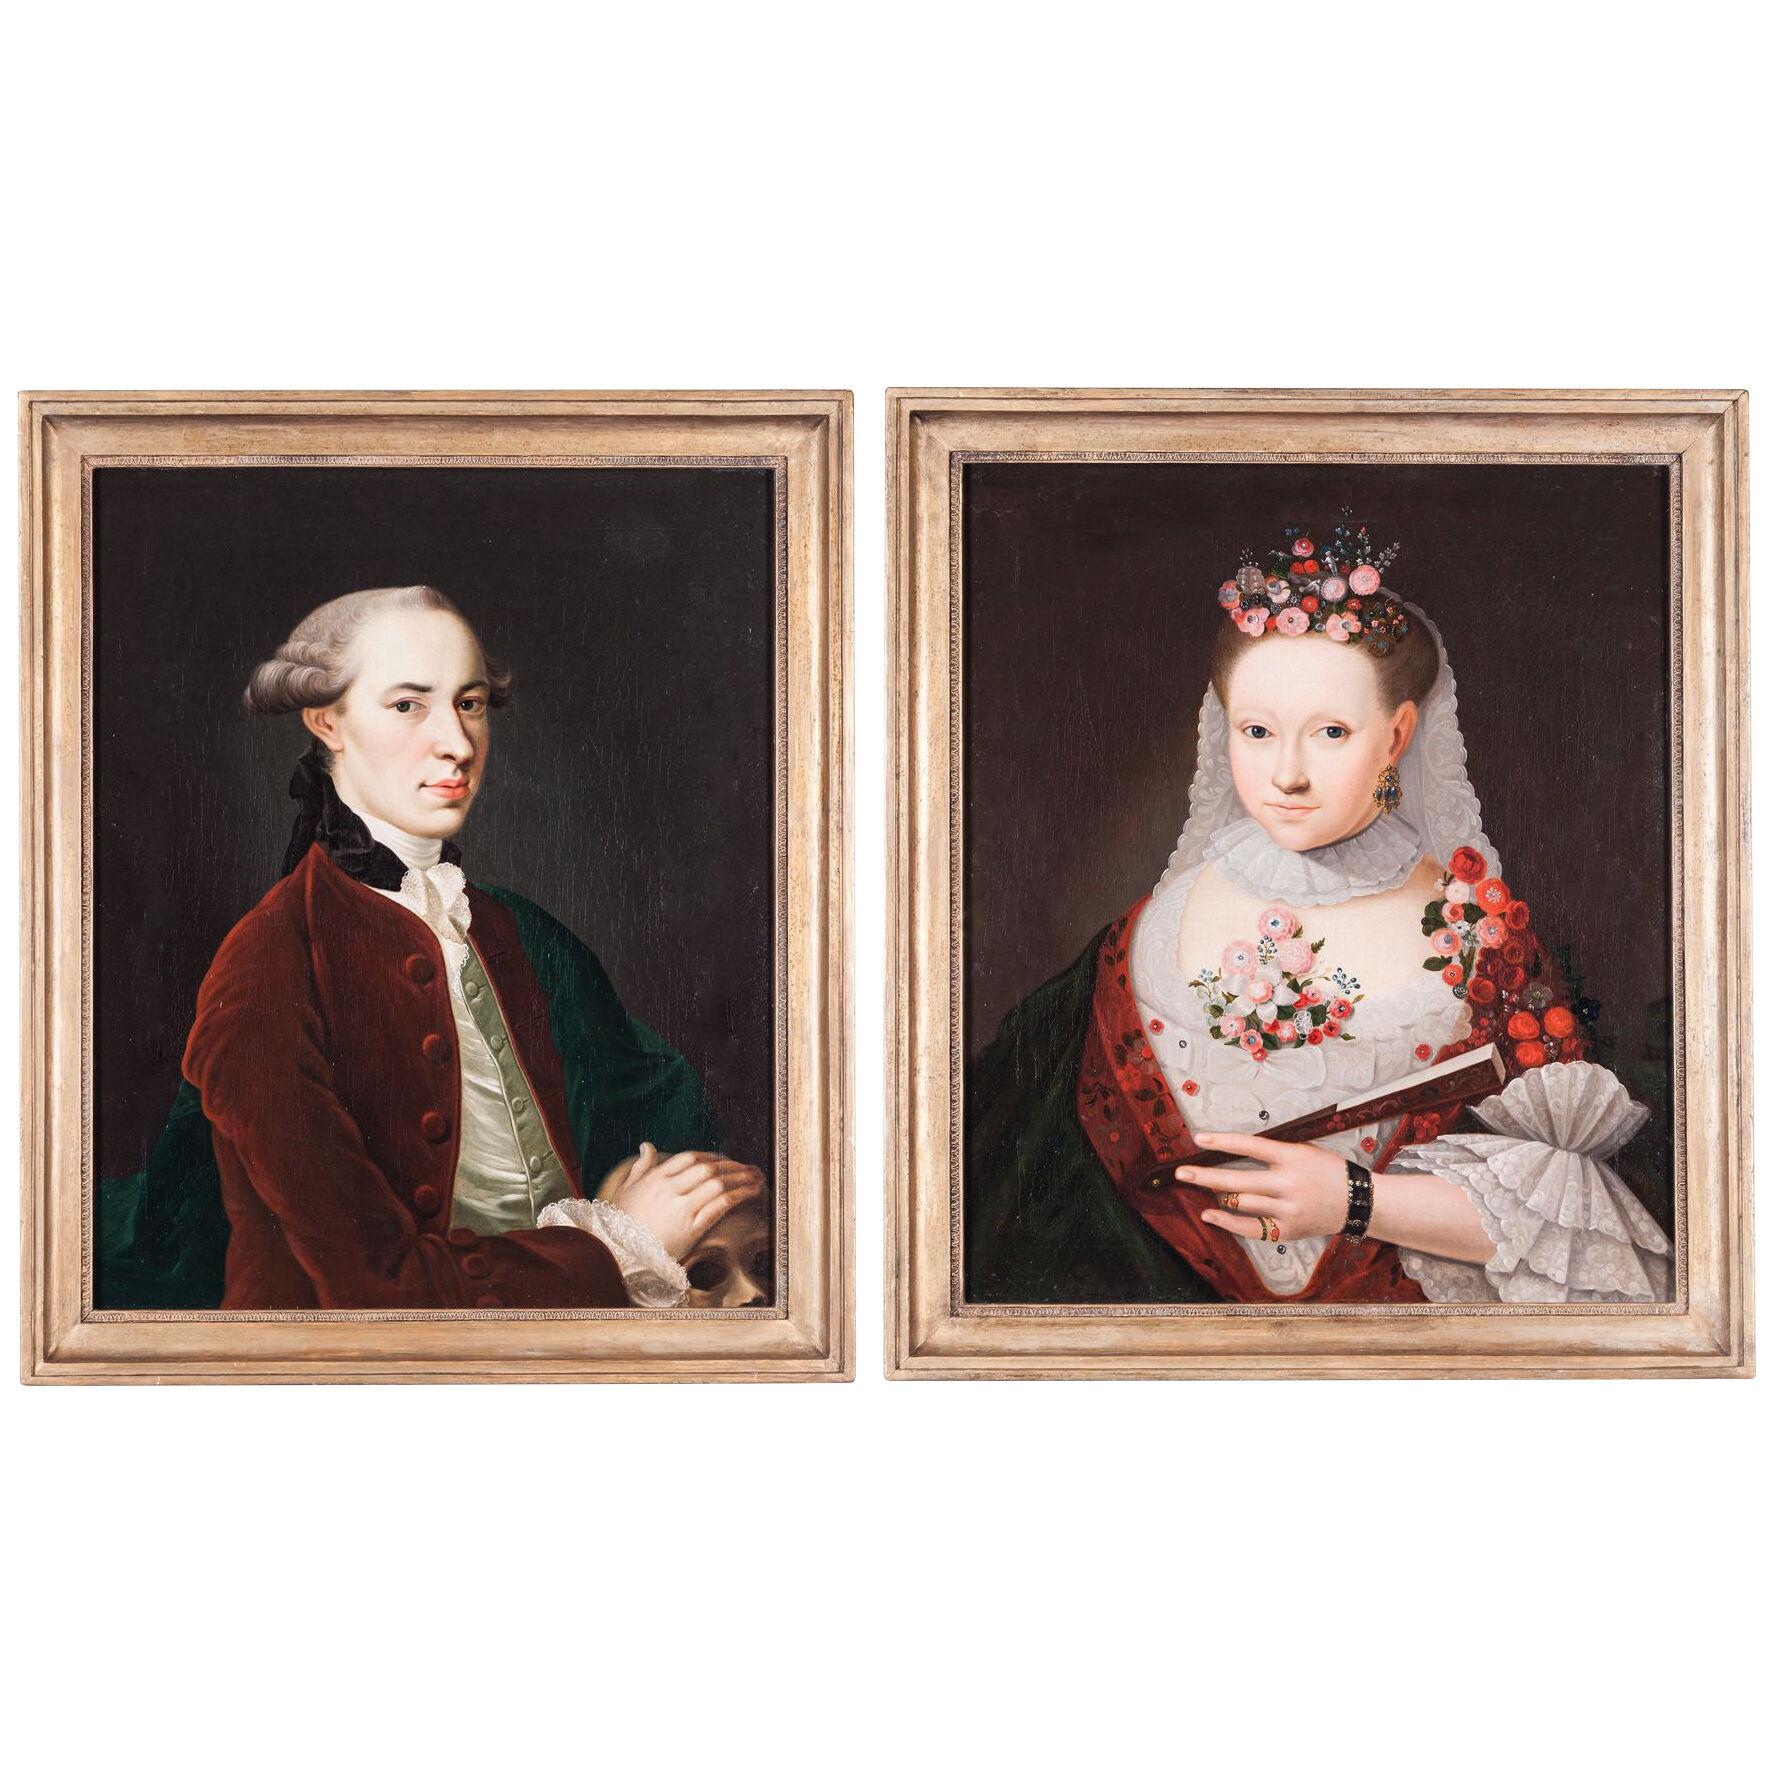 Pair of Early 19th Century Danish Portraits